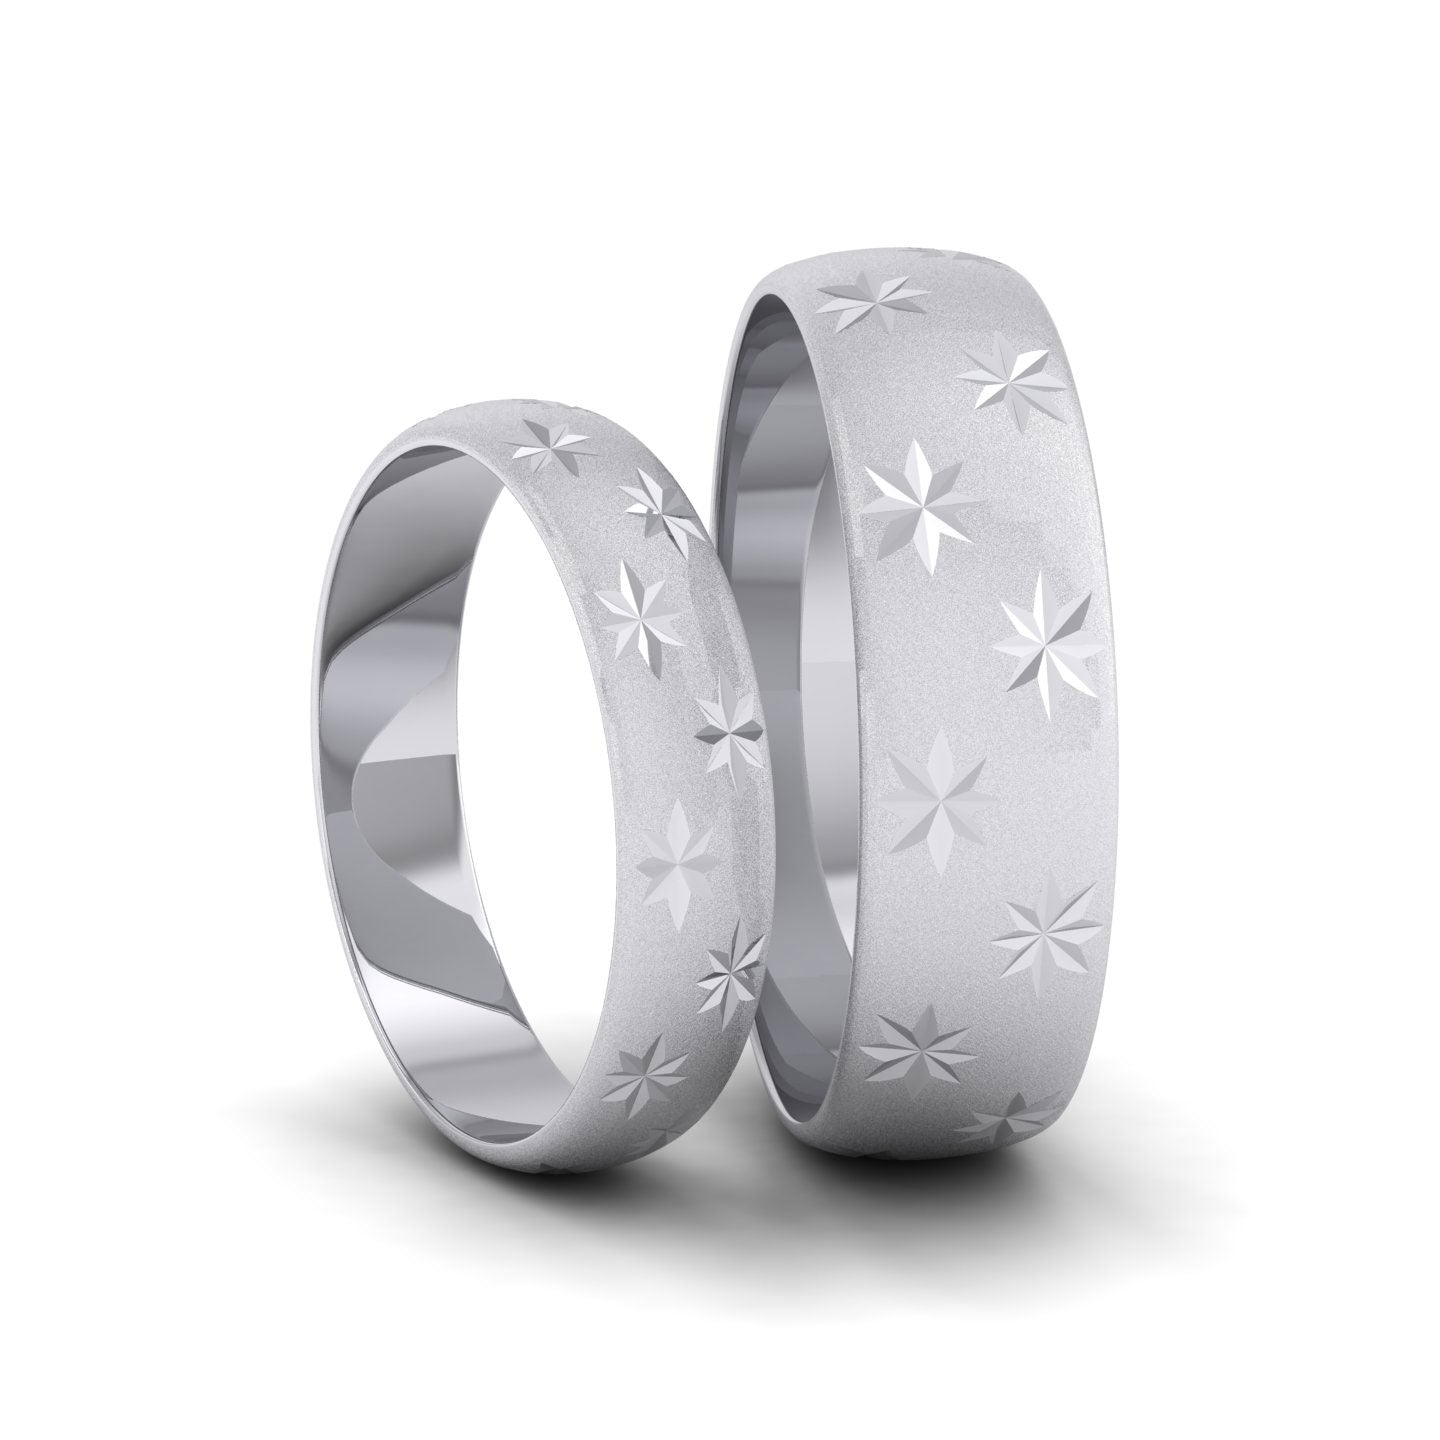 Star Patterned 950 Platinum 6mm Wedding Ring